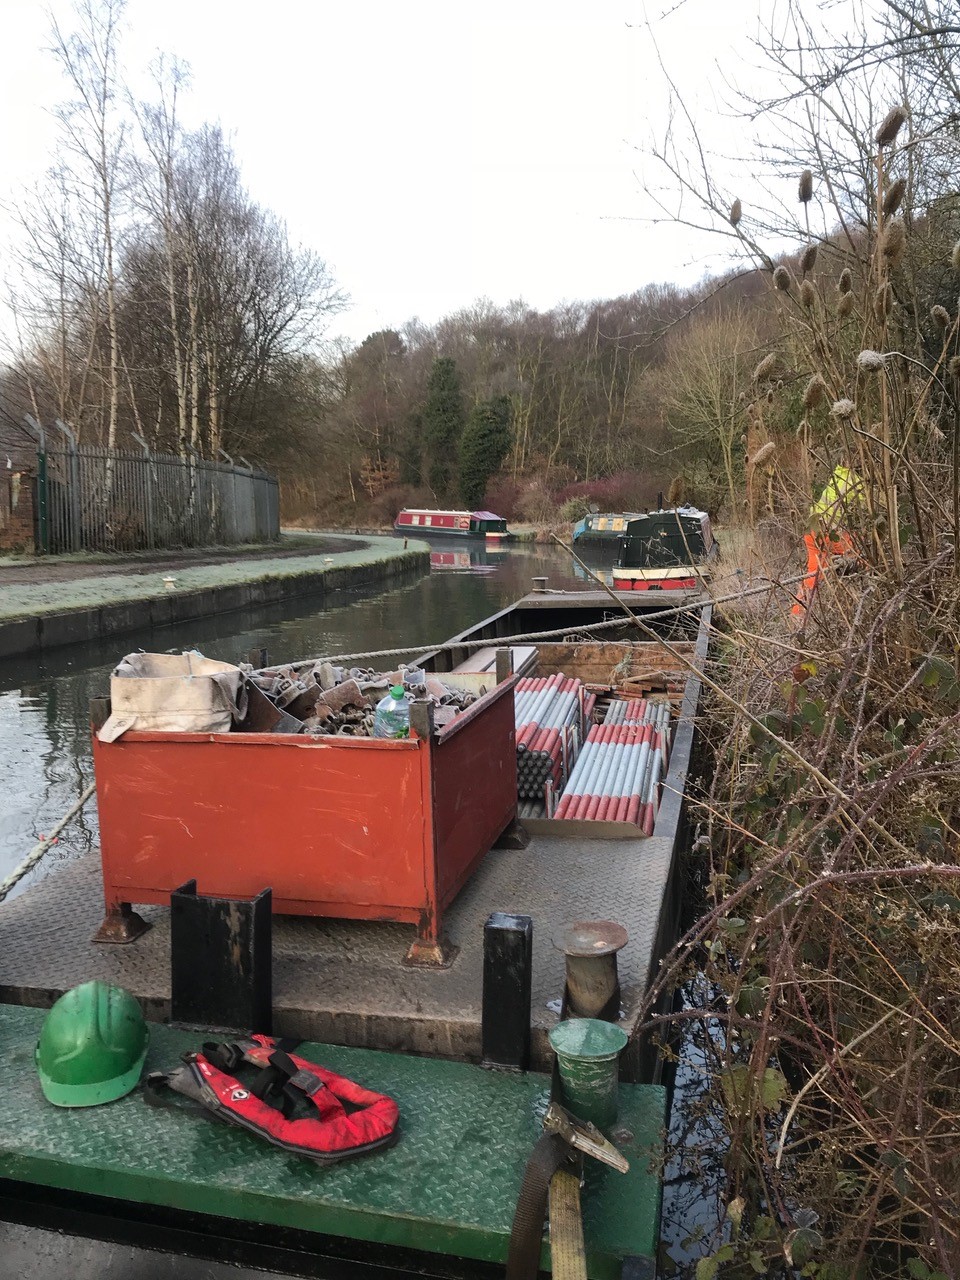 Tamworth Scaffolding: Bridge Works - Canal Project
